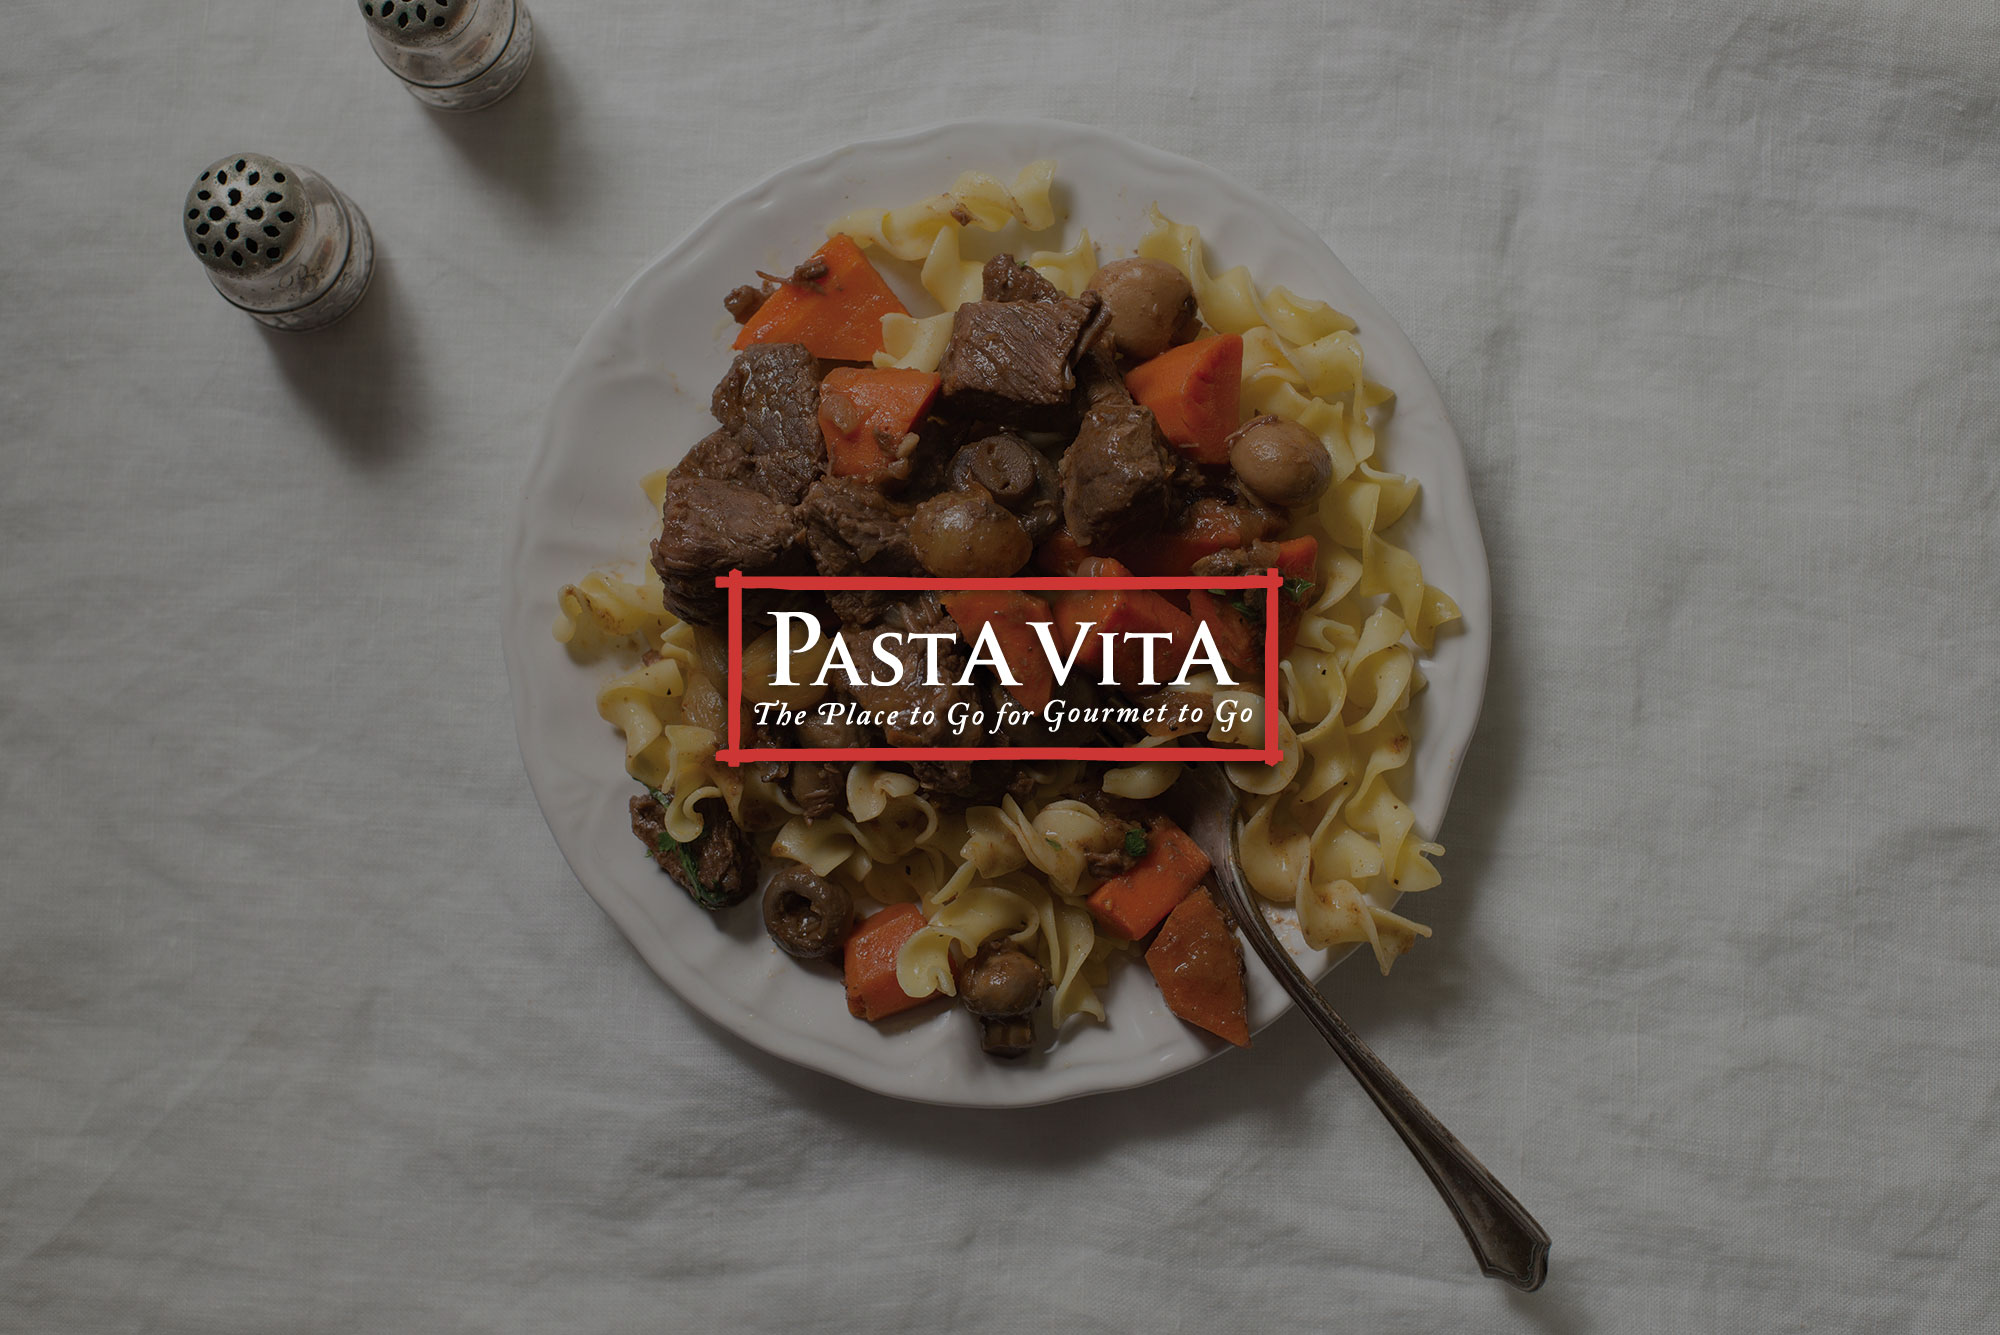 Gourmet for Good - Pasta Vita Fundraiser